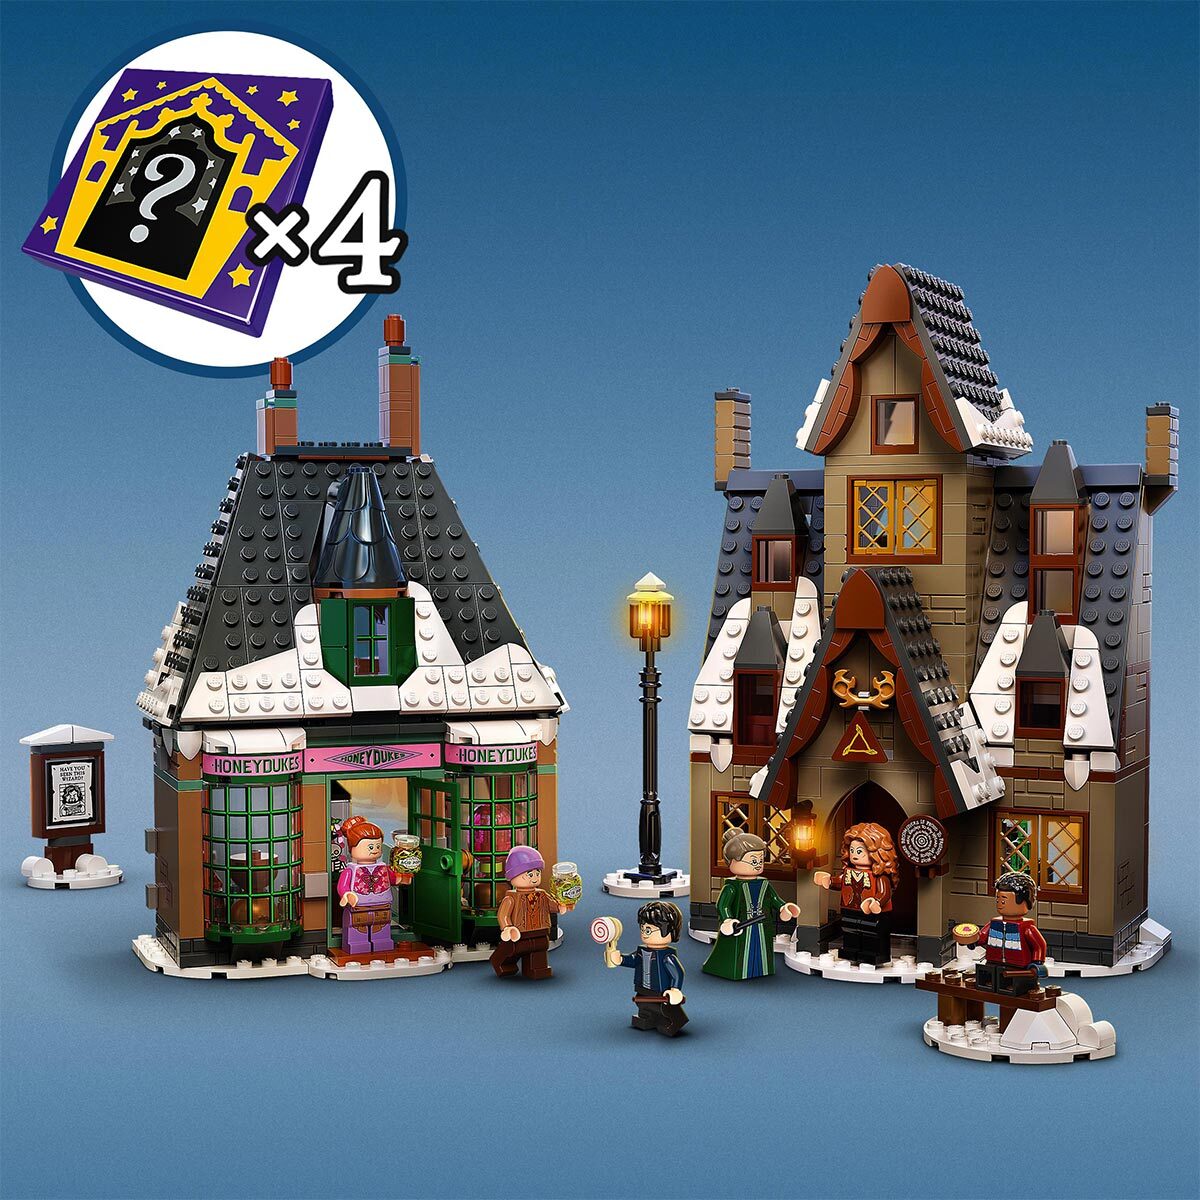 Buy LEGO Harry Potter Hogsmeade Village Visit Close up 2 Image at costco.co.uk